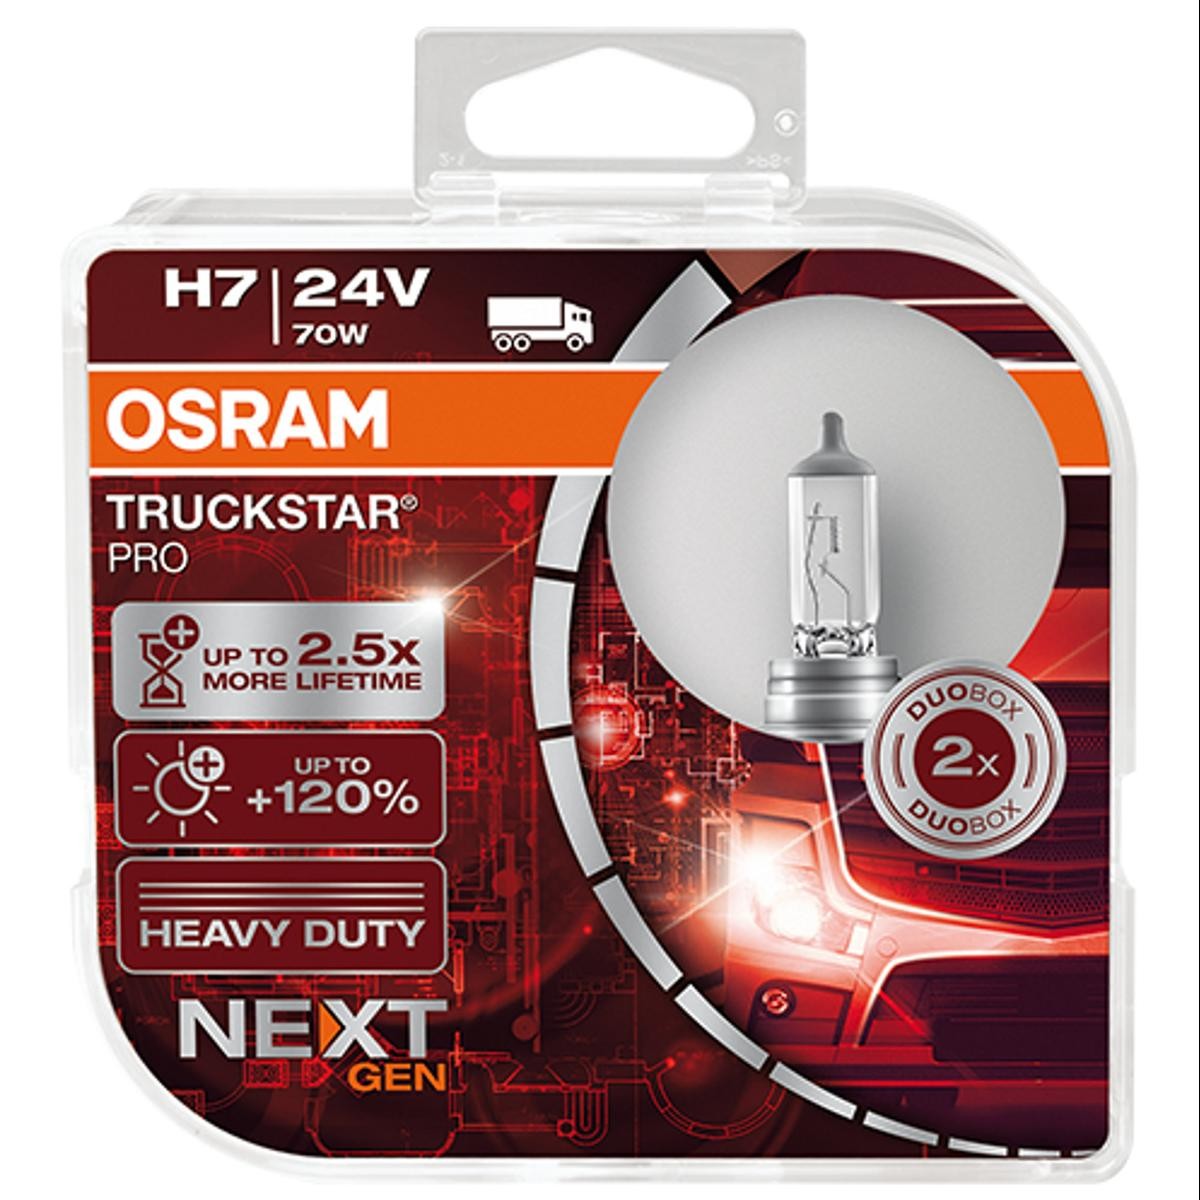 H7 OSRAM TRUCKSTAR PRO H7 24V 70W PX26d, 3200K, Halogen High beam bulb 64215TSP-HCB buy